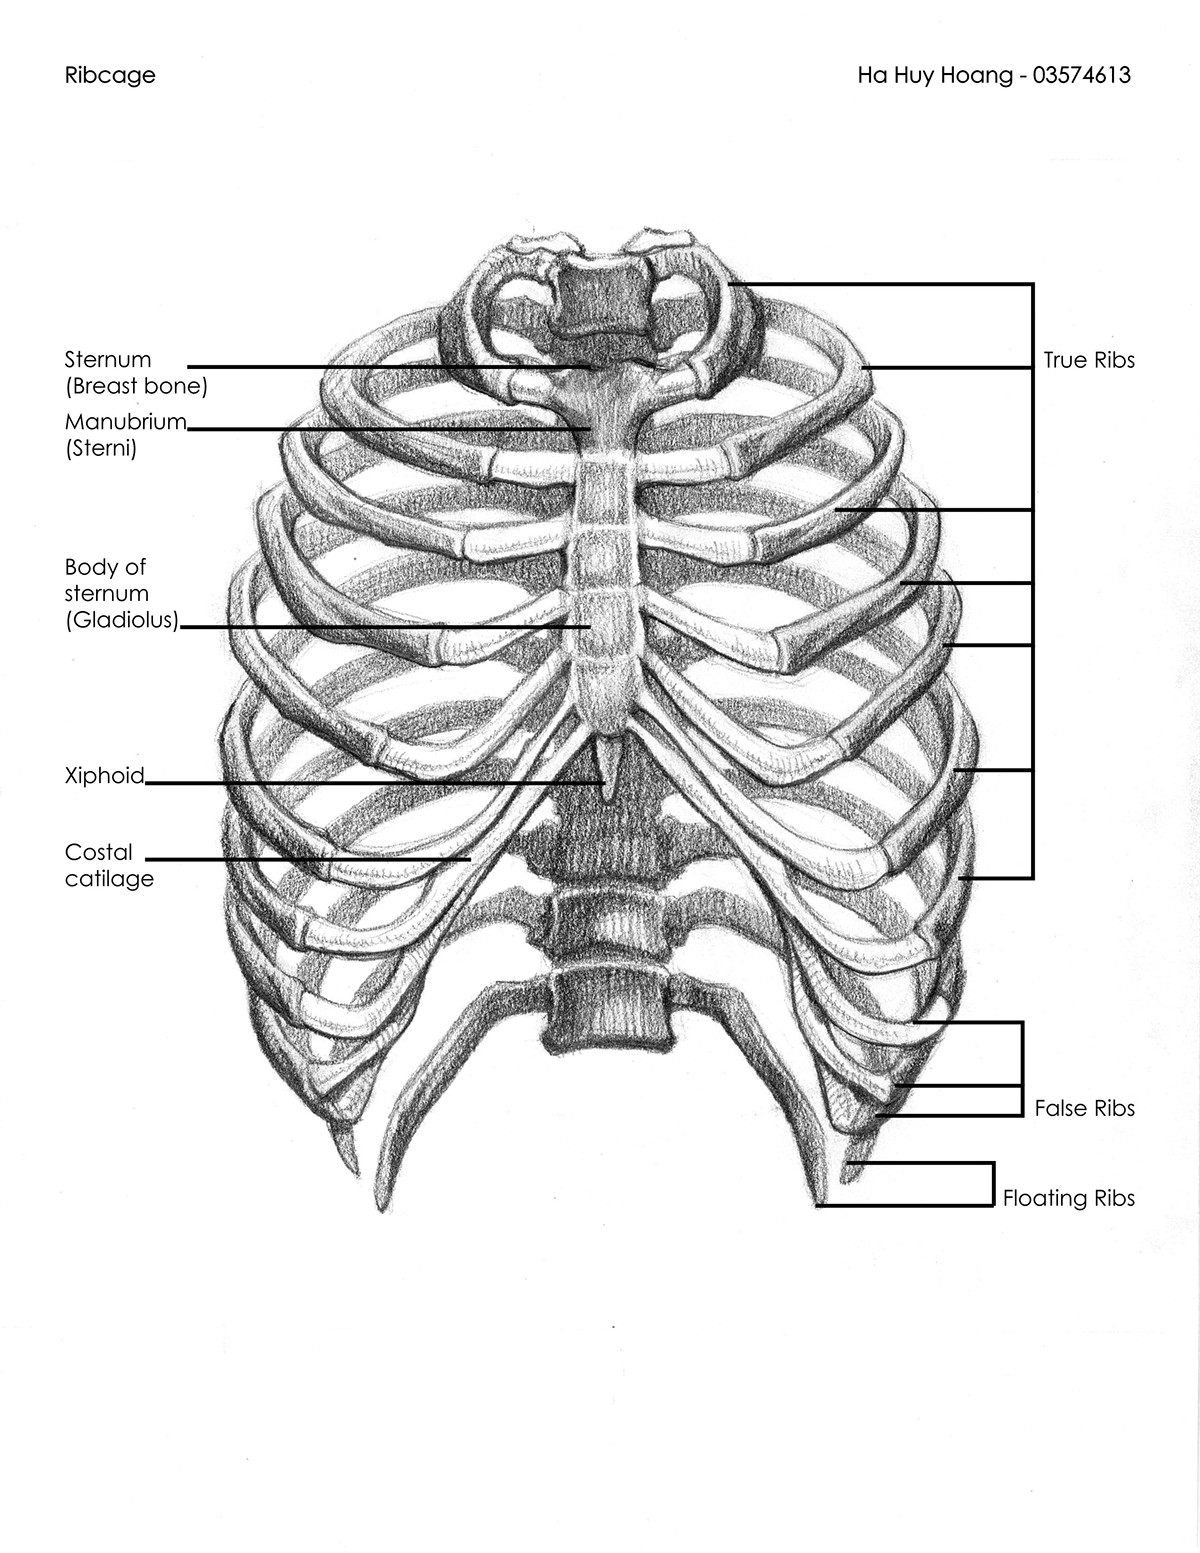 splendidriver hahuyhoang ha huy hoang anatomy anatomy drawings skull bones muscles study Education